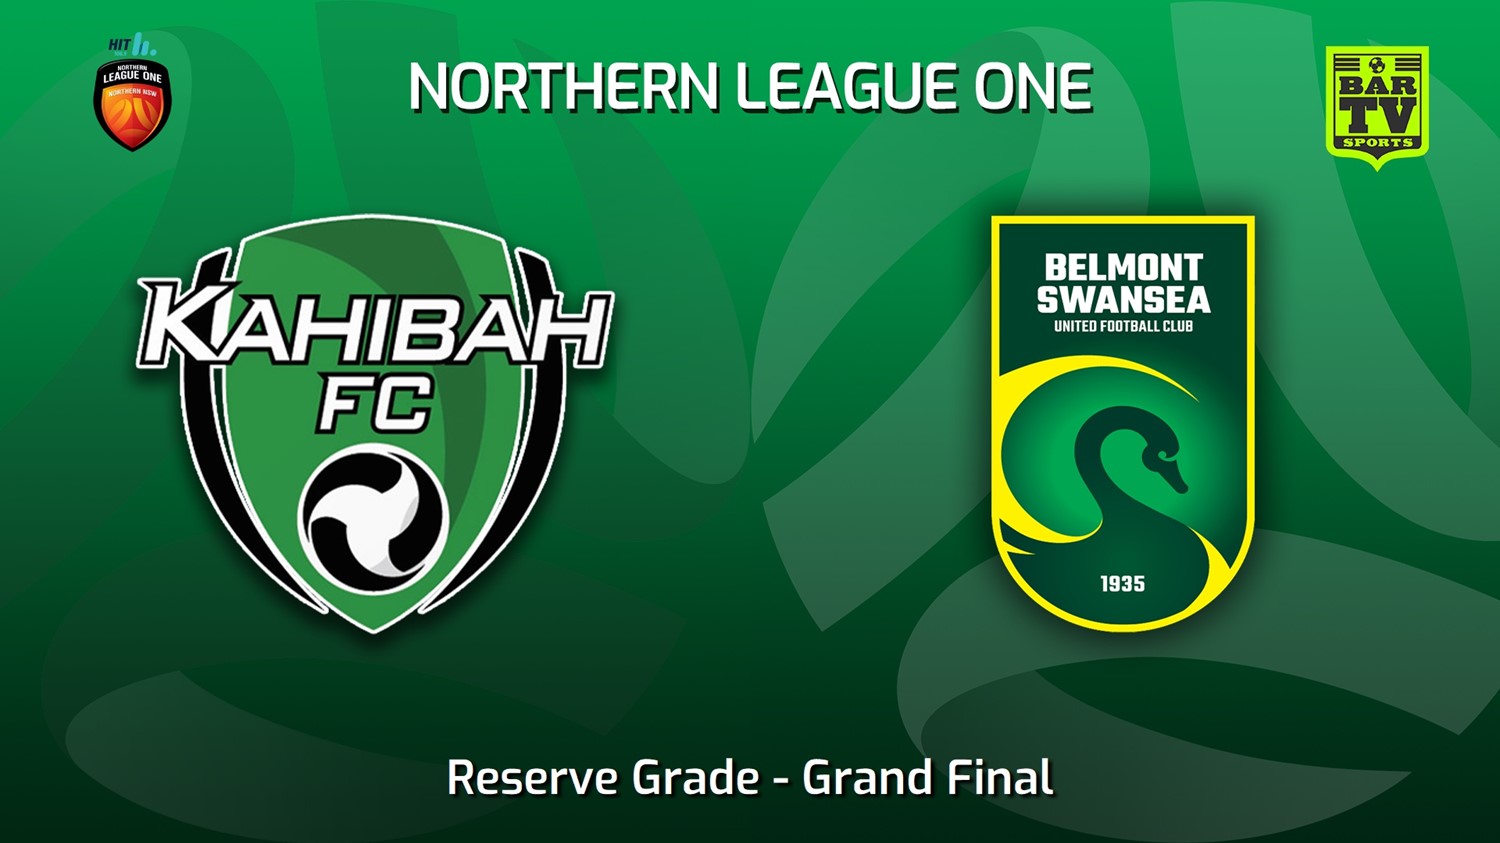 230930-Northern League One Grand Final - Reserve Grade - Kahibah FC v Belmont Swansea United FC Minigame Slate Image